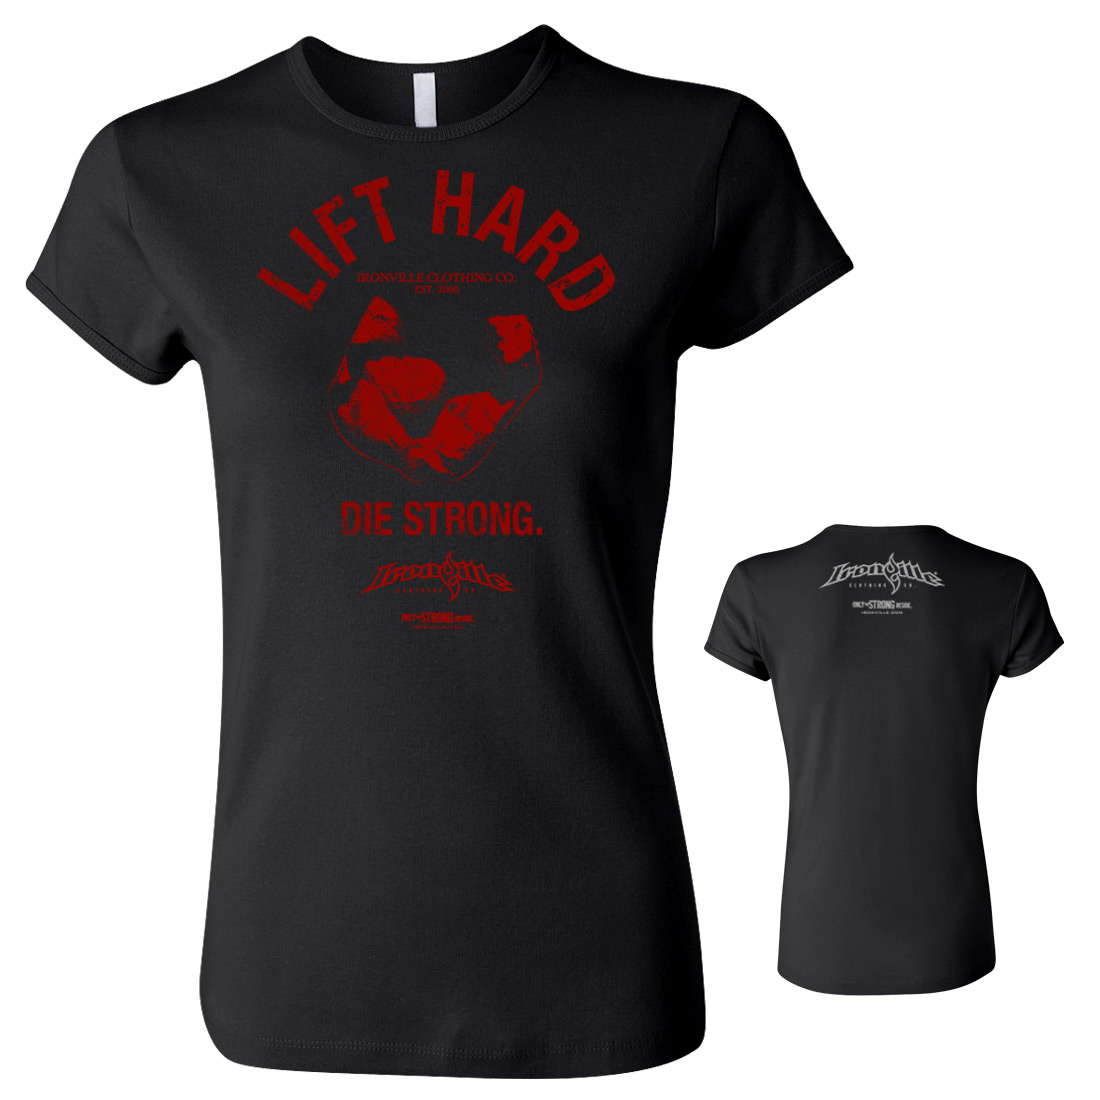 Lift Hard - WOMENS T-SHIRT